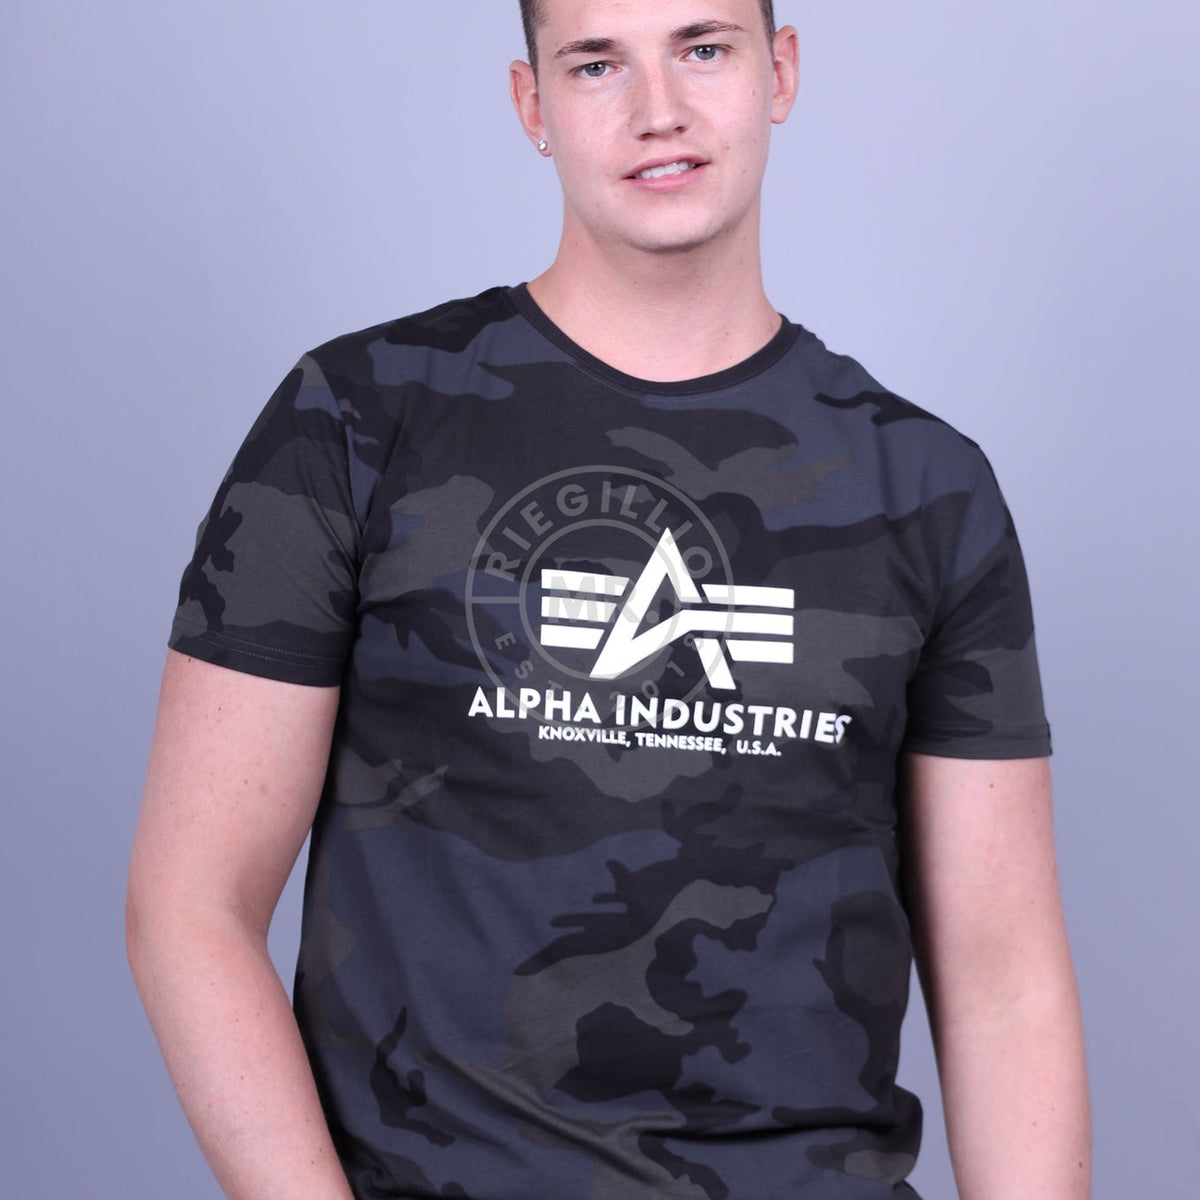 Alpha Industries Basic T-Shirt Black Camo at MR. Riegillio